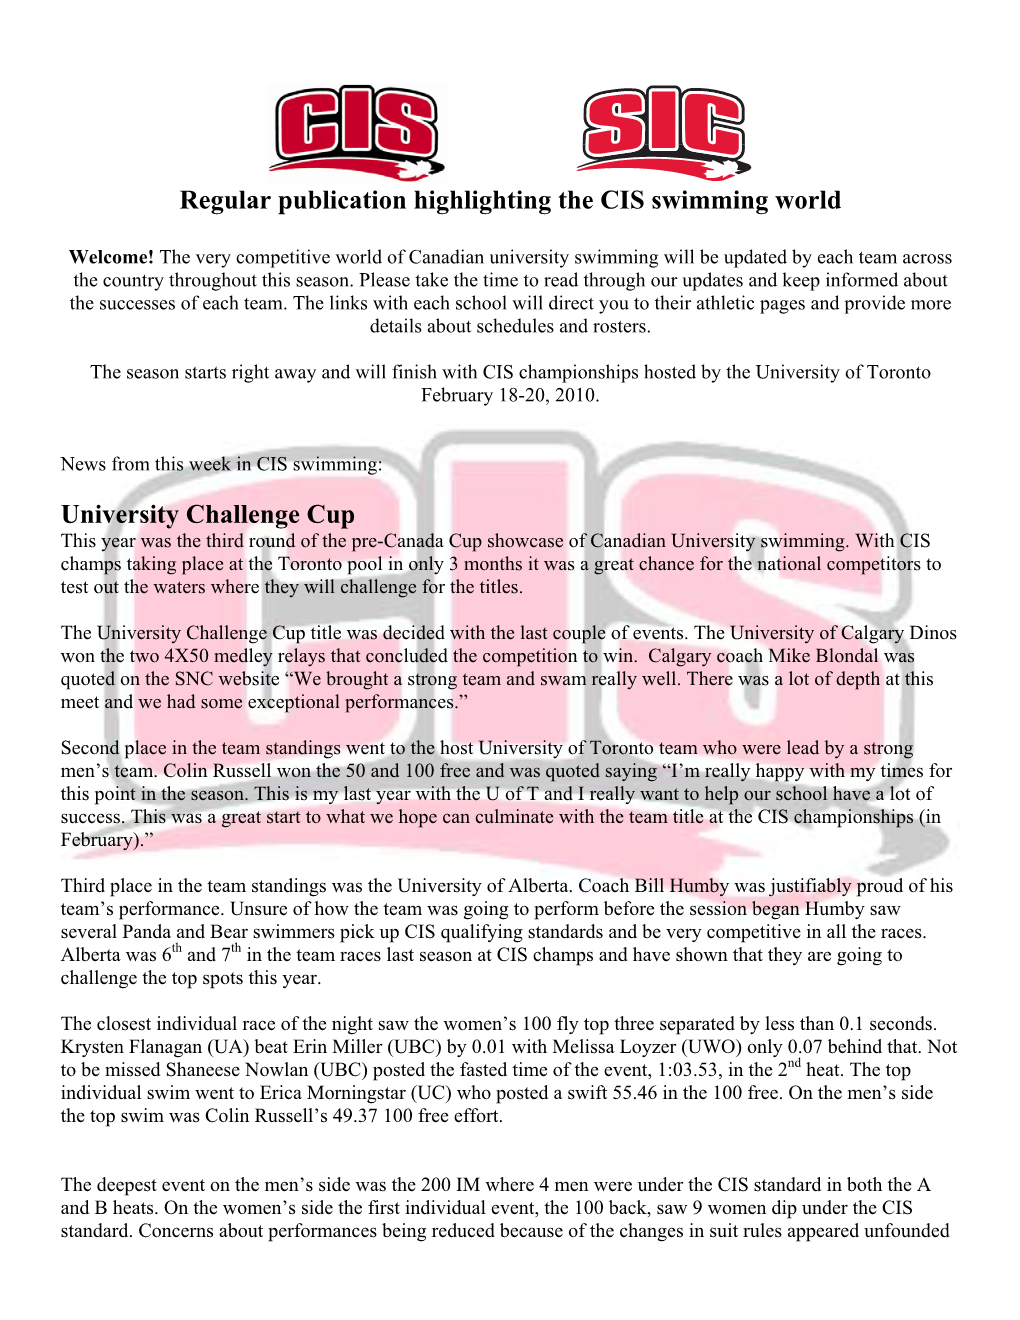 Regular Publication Highlighting the CIS Swimming World University